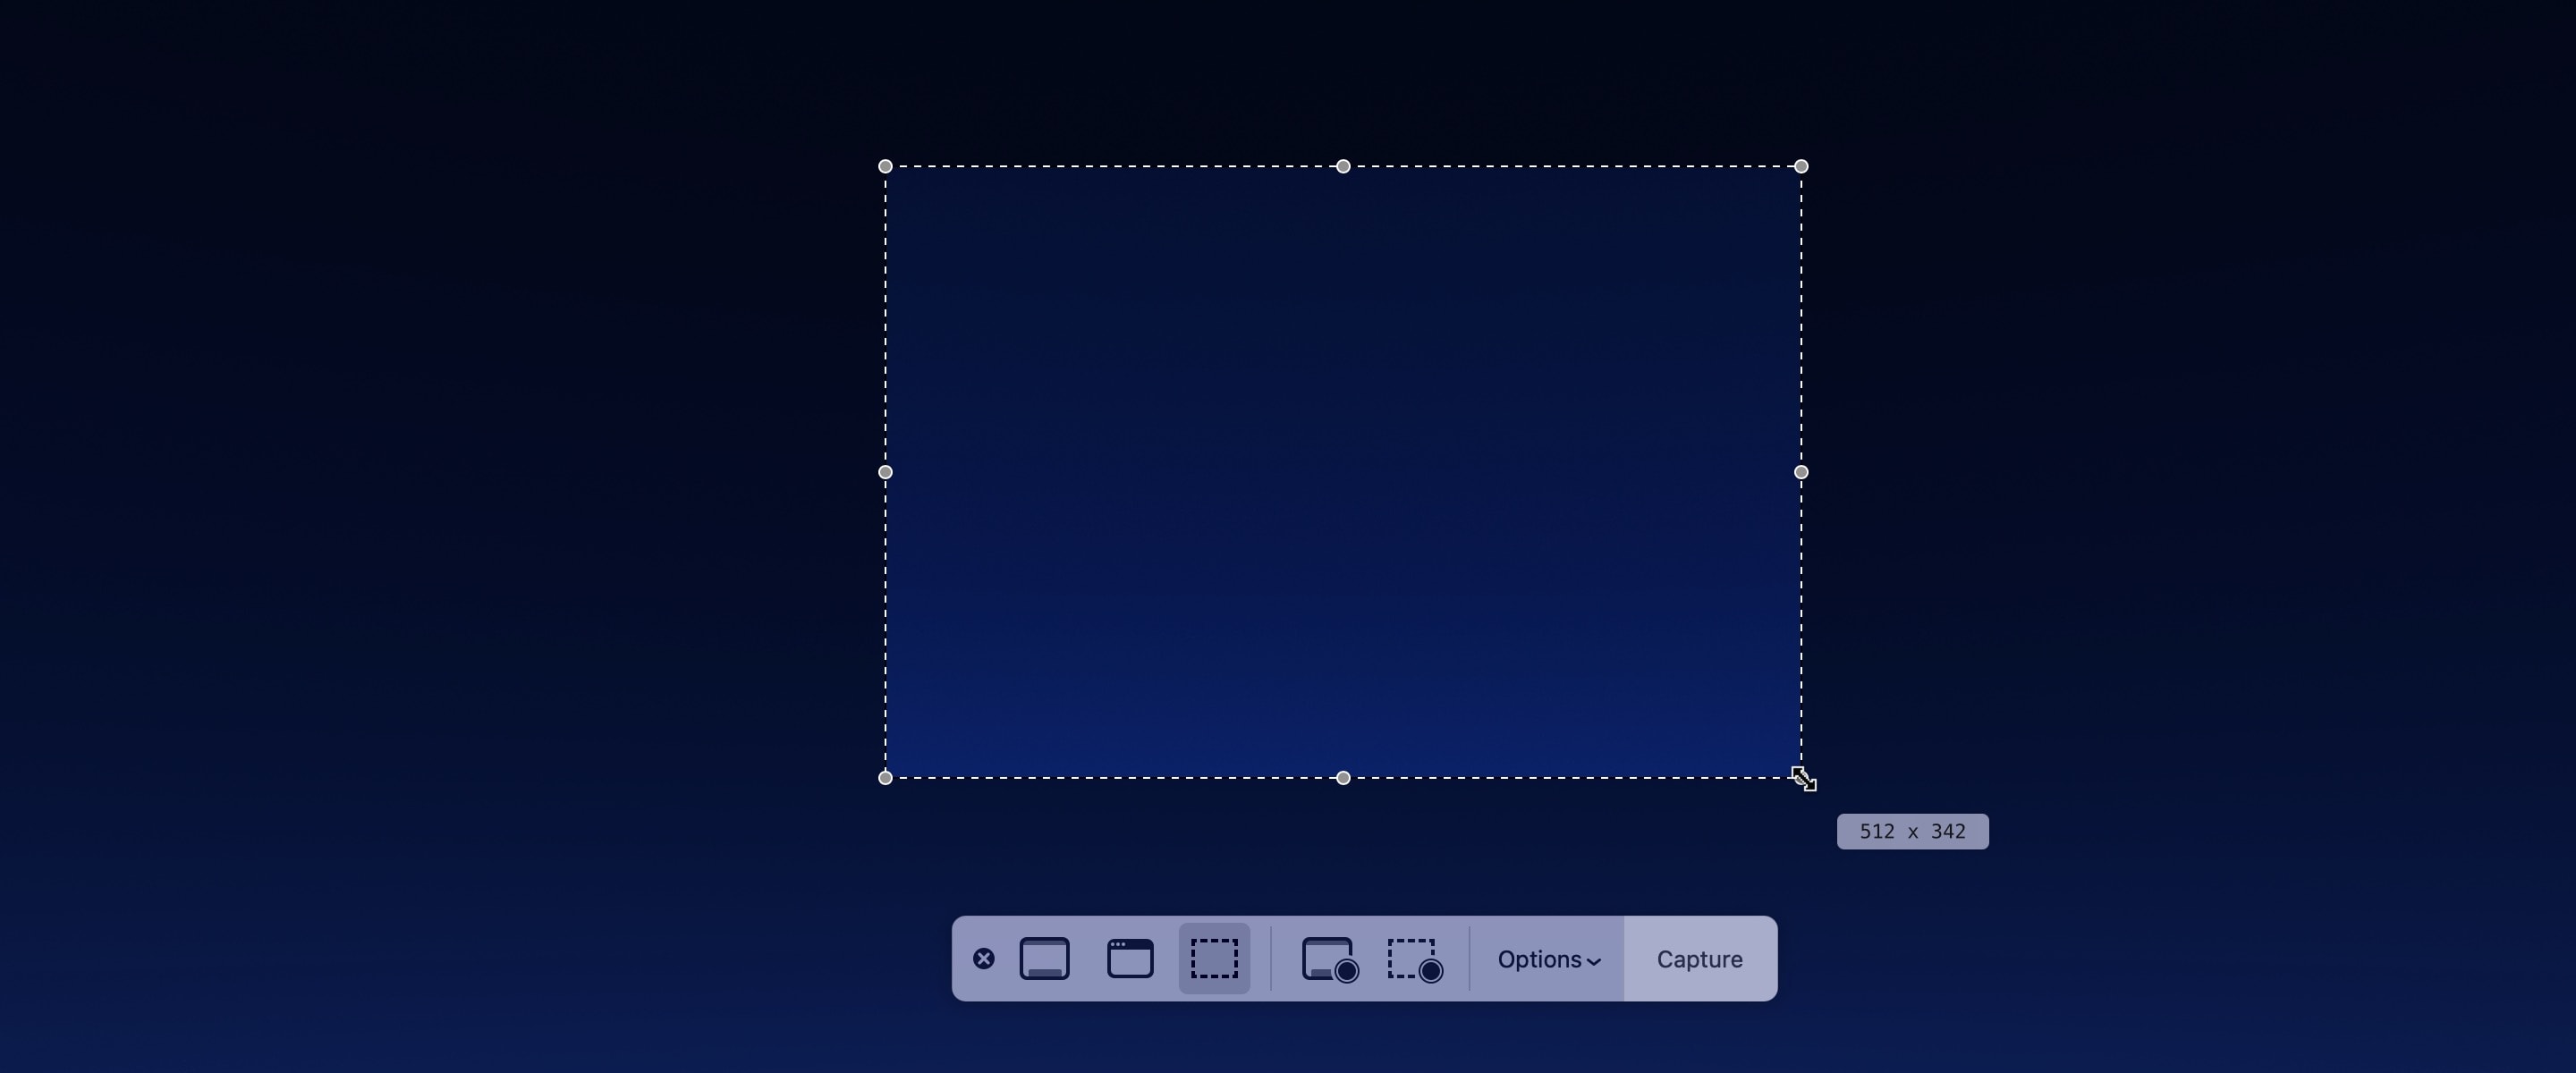 Screenshot App - Capture Selected Area